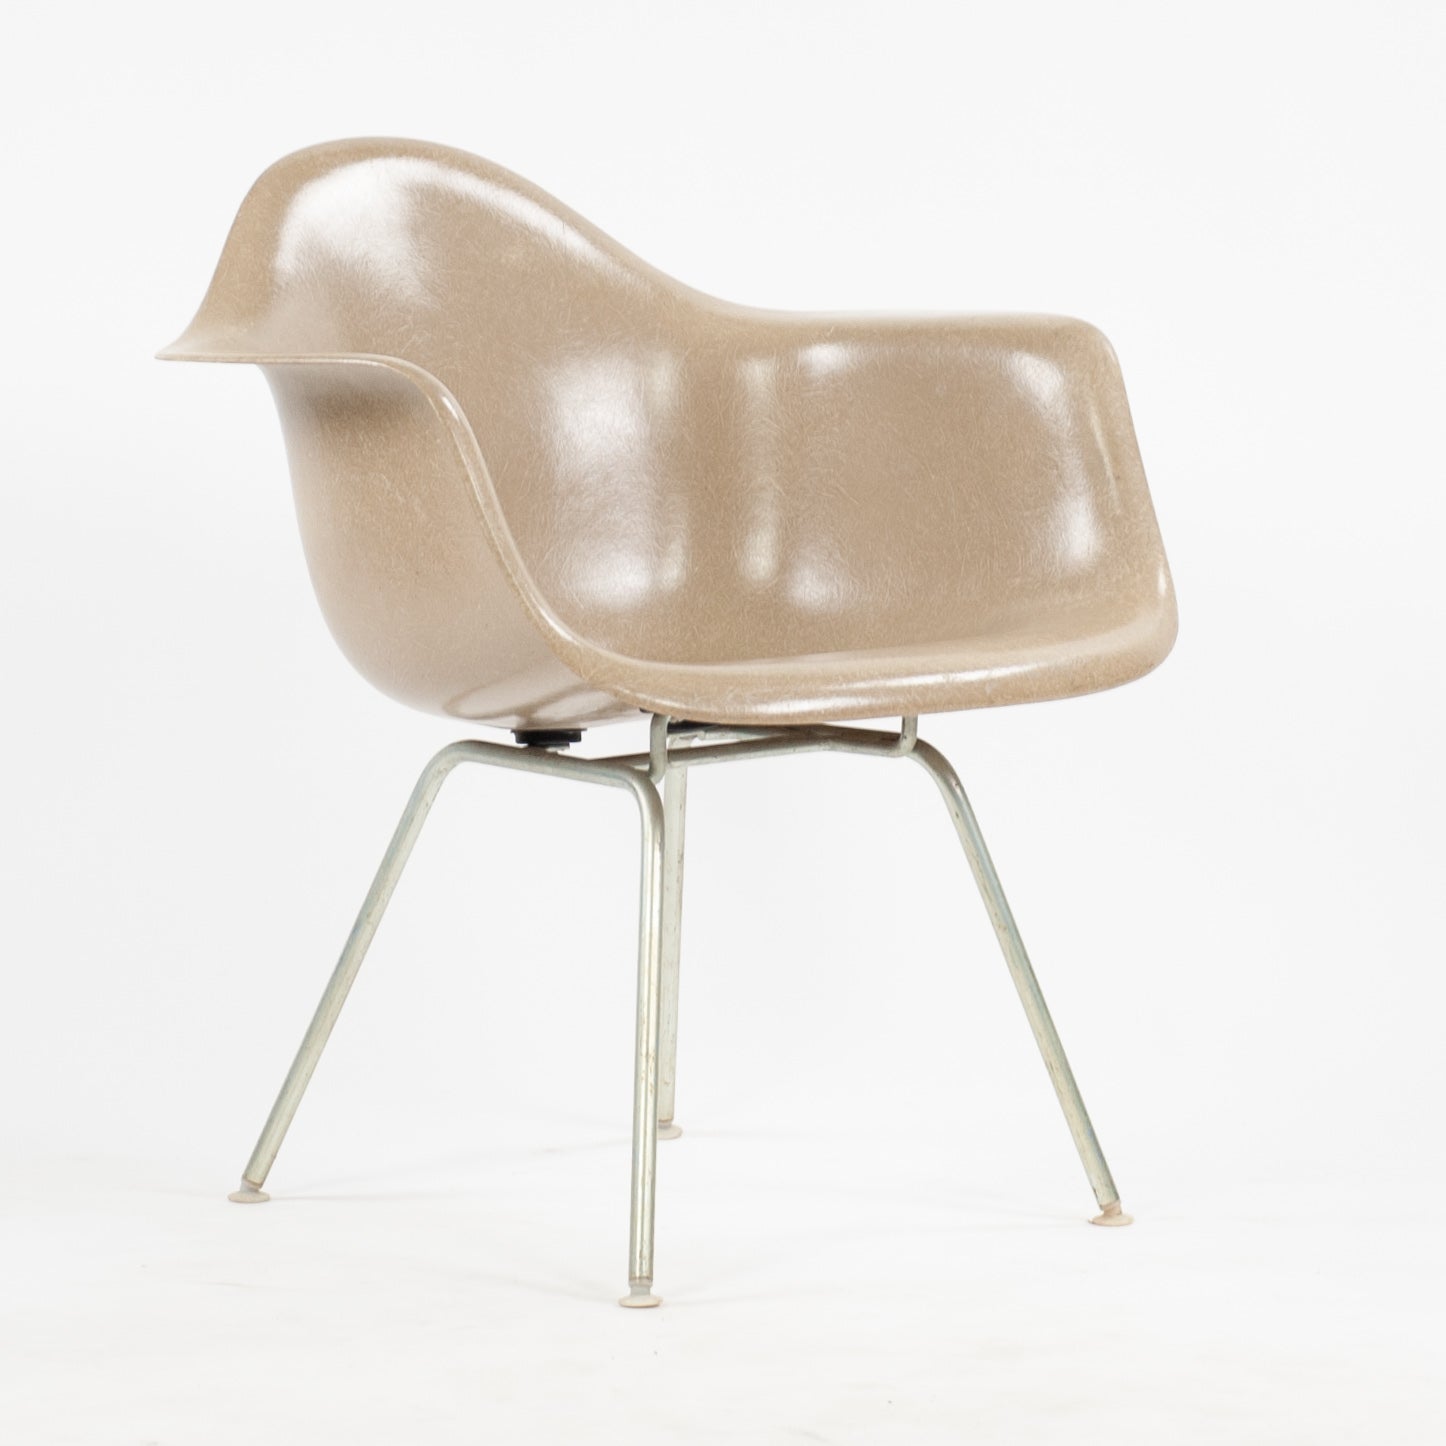 SOLD 1950's Original Herman Miller Eames Fiberglass Armshell Chair LAX Lounge